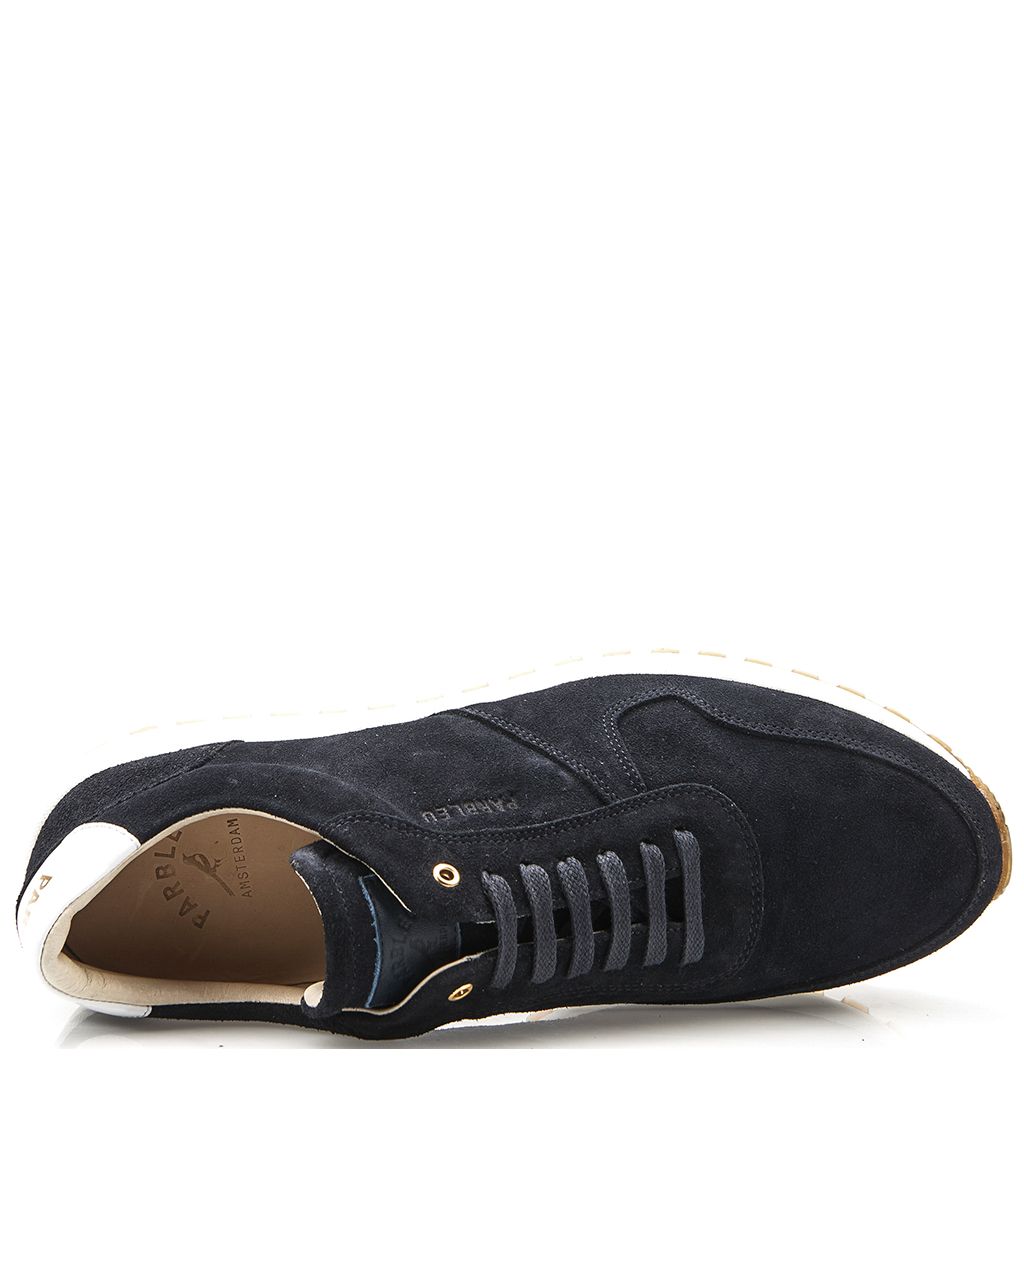 Parbleu Sneakers Donker blauw 076593-001-41